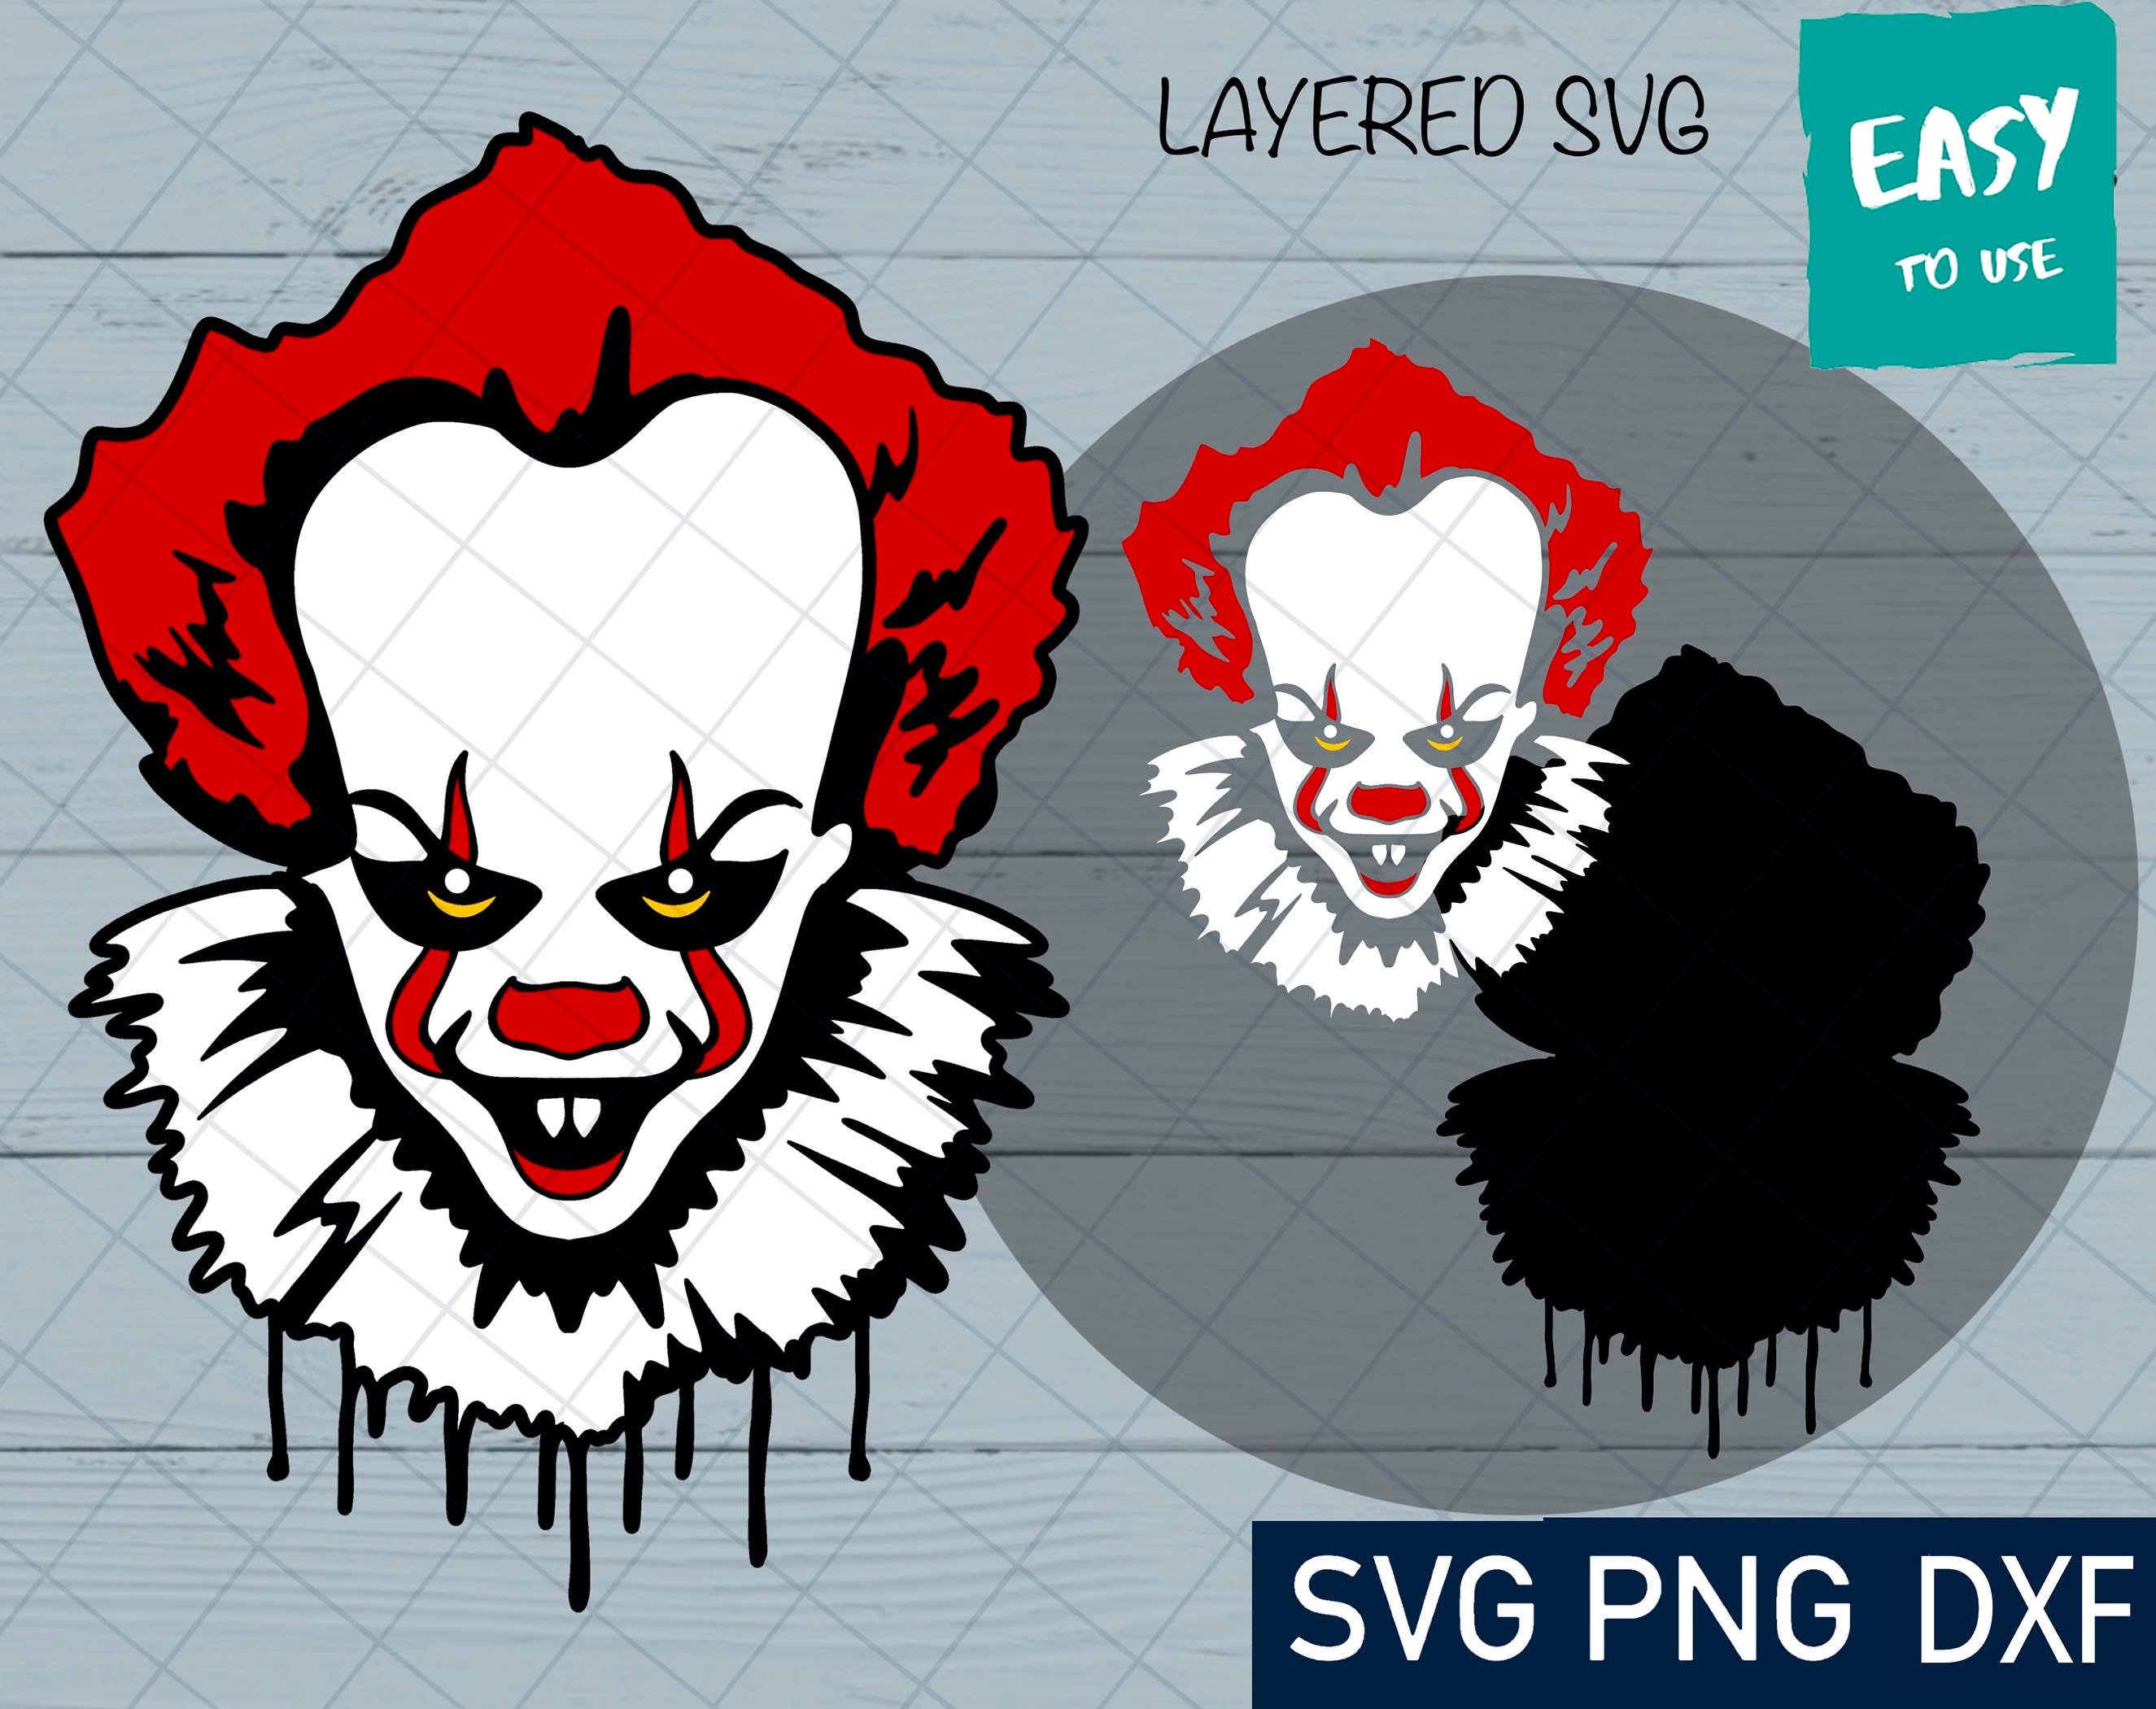 Clown SVG, Cricut svg, Clipart, Layered SVG, Files for Cricut, Cut files, Silhouette, T Shirt svg, Horror movie svg